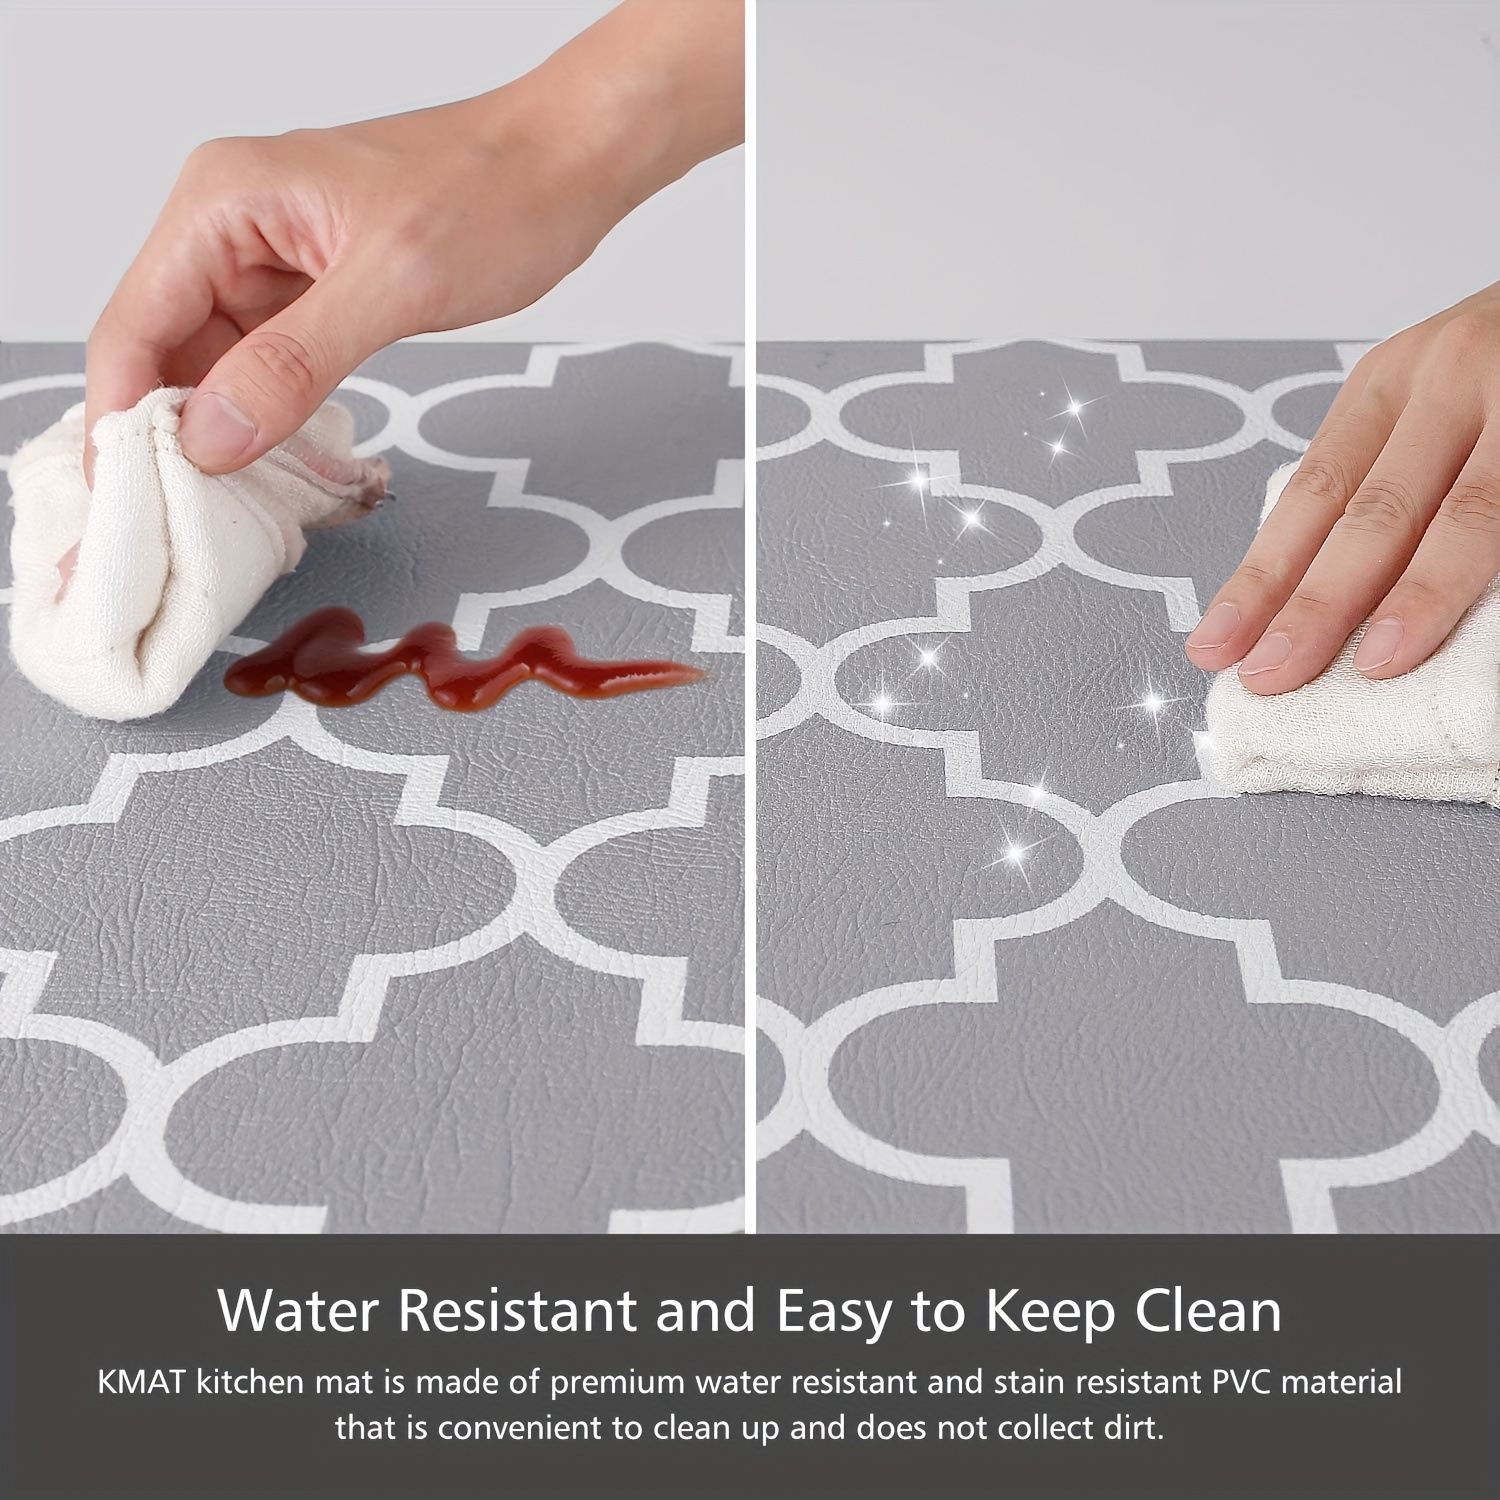 Kitchen Runner Rugs Anti-Fatigue mats - 3/4 Inch Thick Non Slip Waterproof  Ergonomic Comfort Mat for Kitchen, Floor Home, Office, Sink, Laundry  (17.3x 28,Blue) 